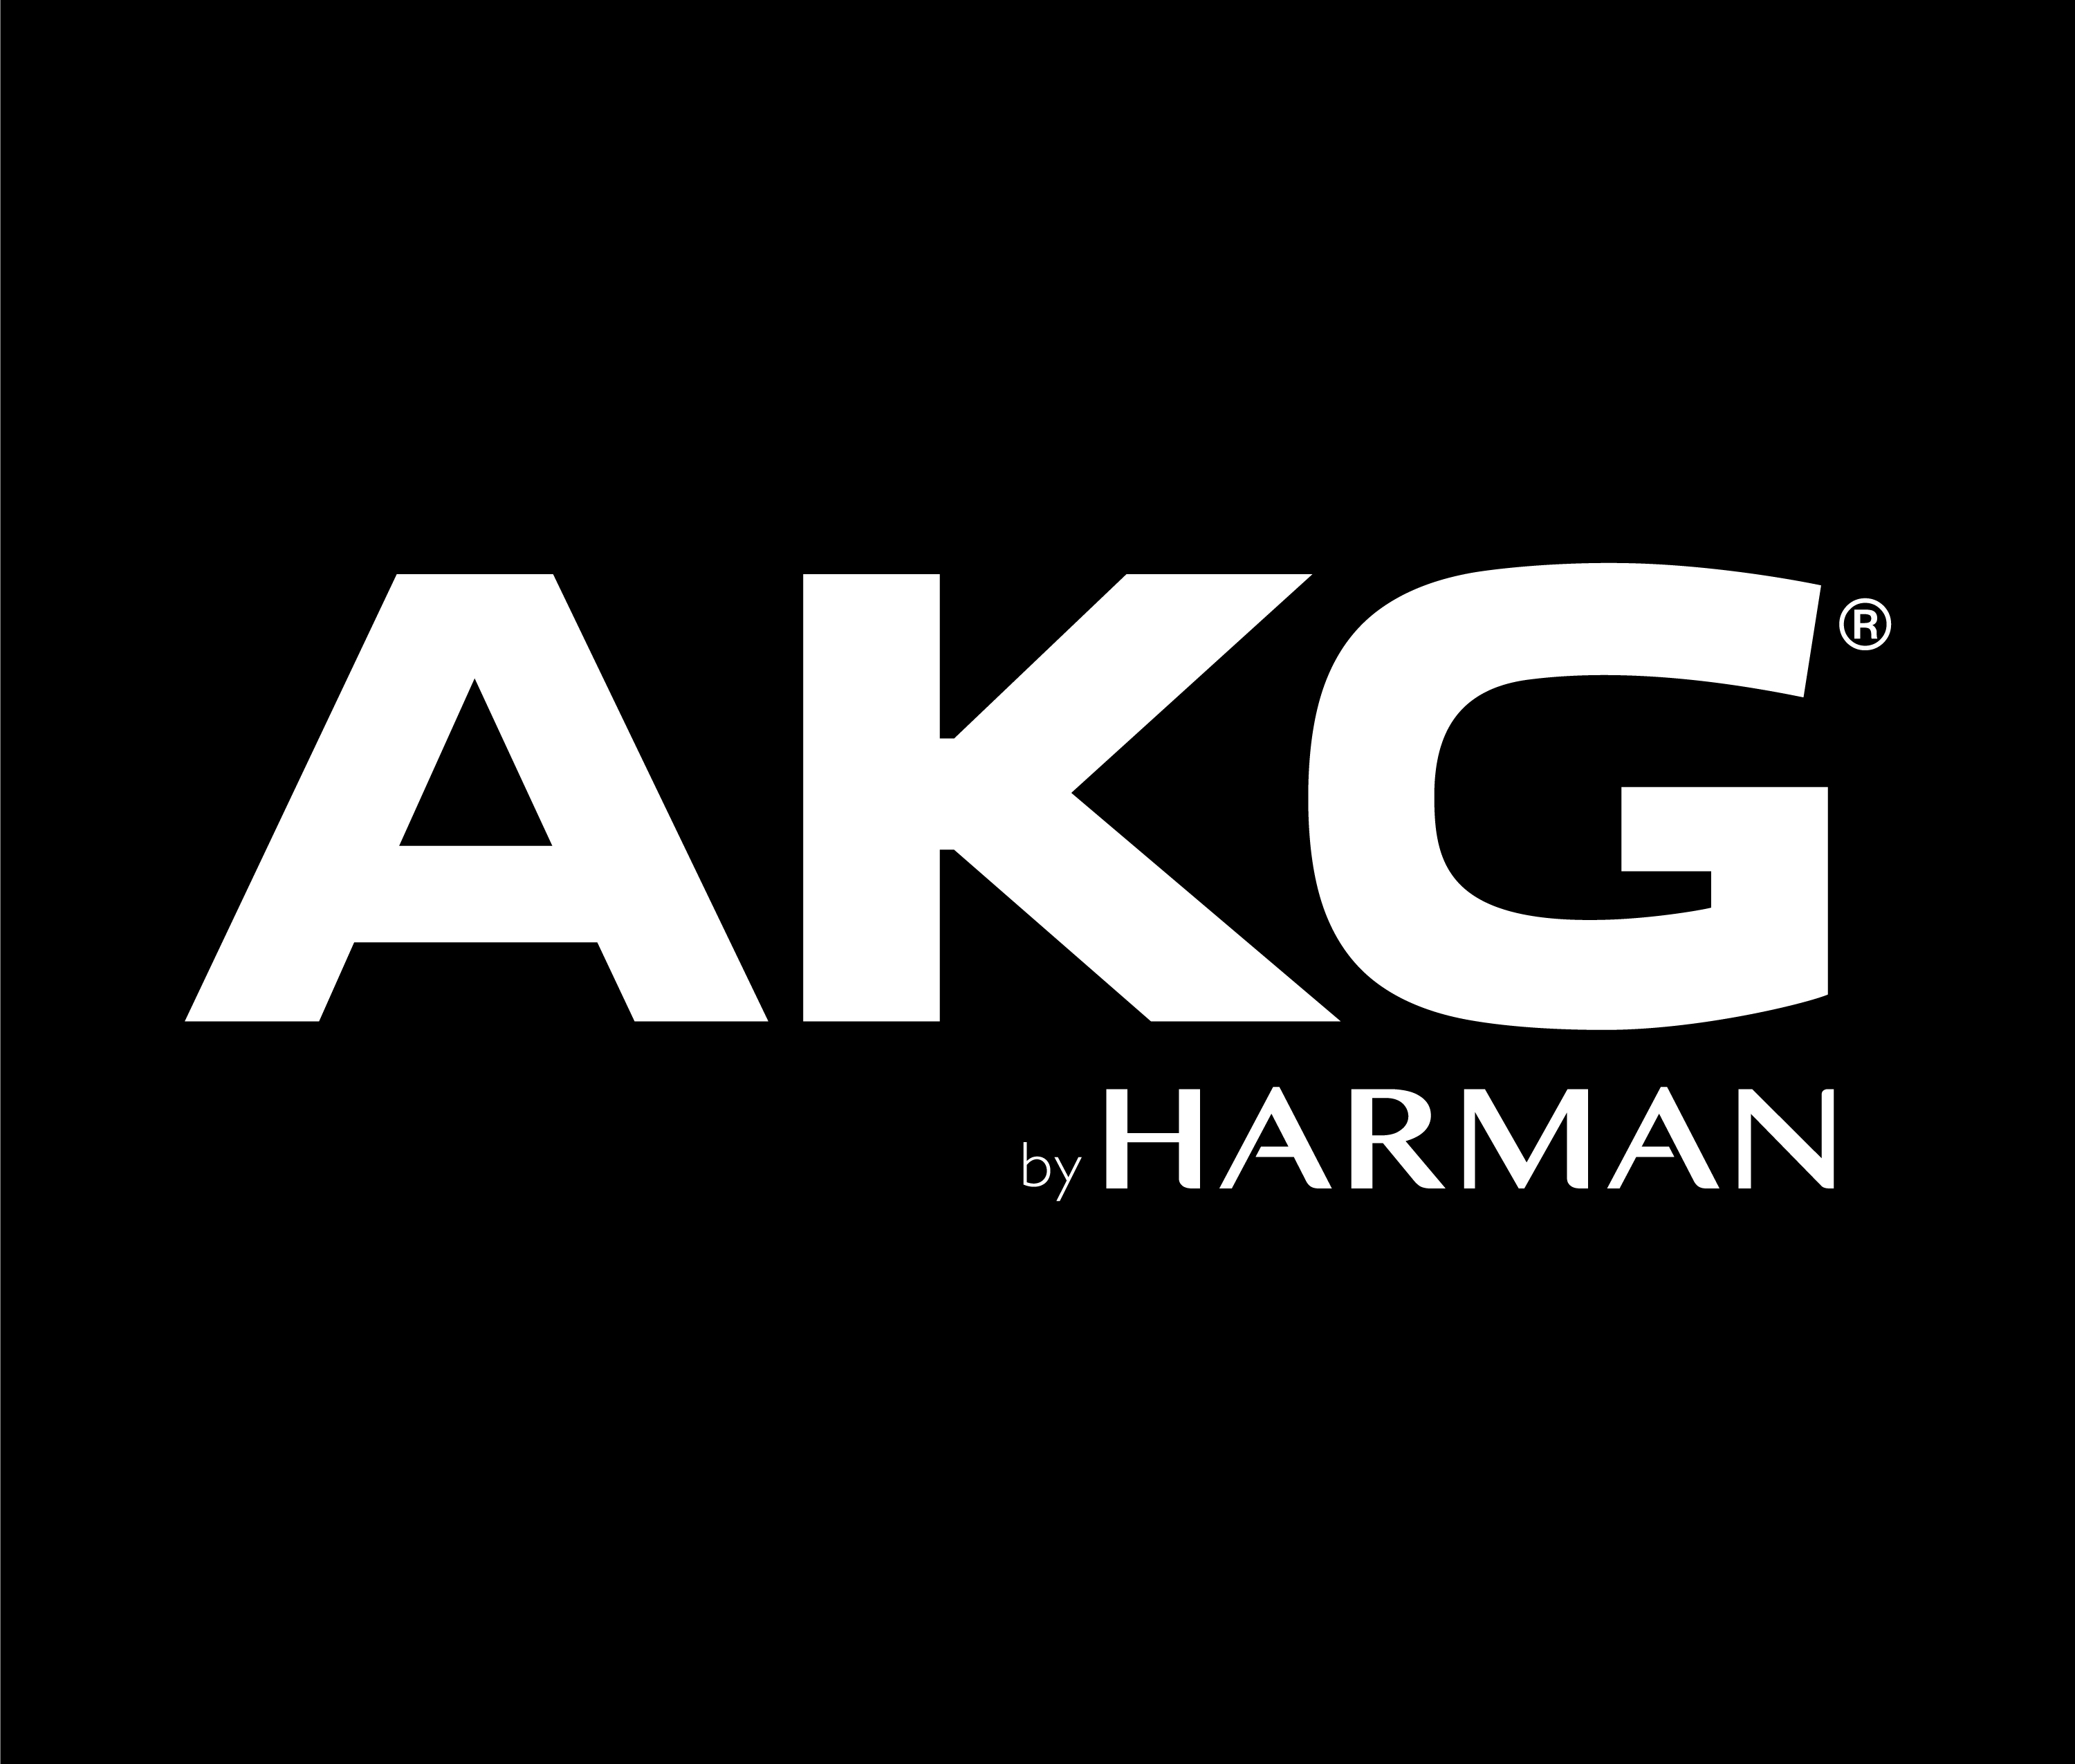 AKG N200NC Wireless | ワイヤレスノイズキャンセリングインイヤー